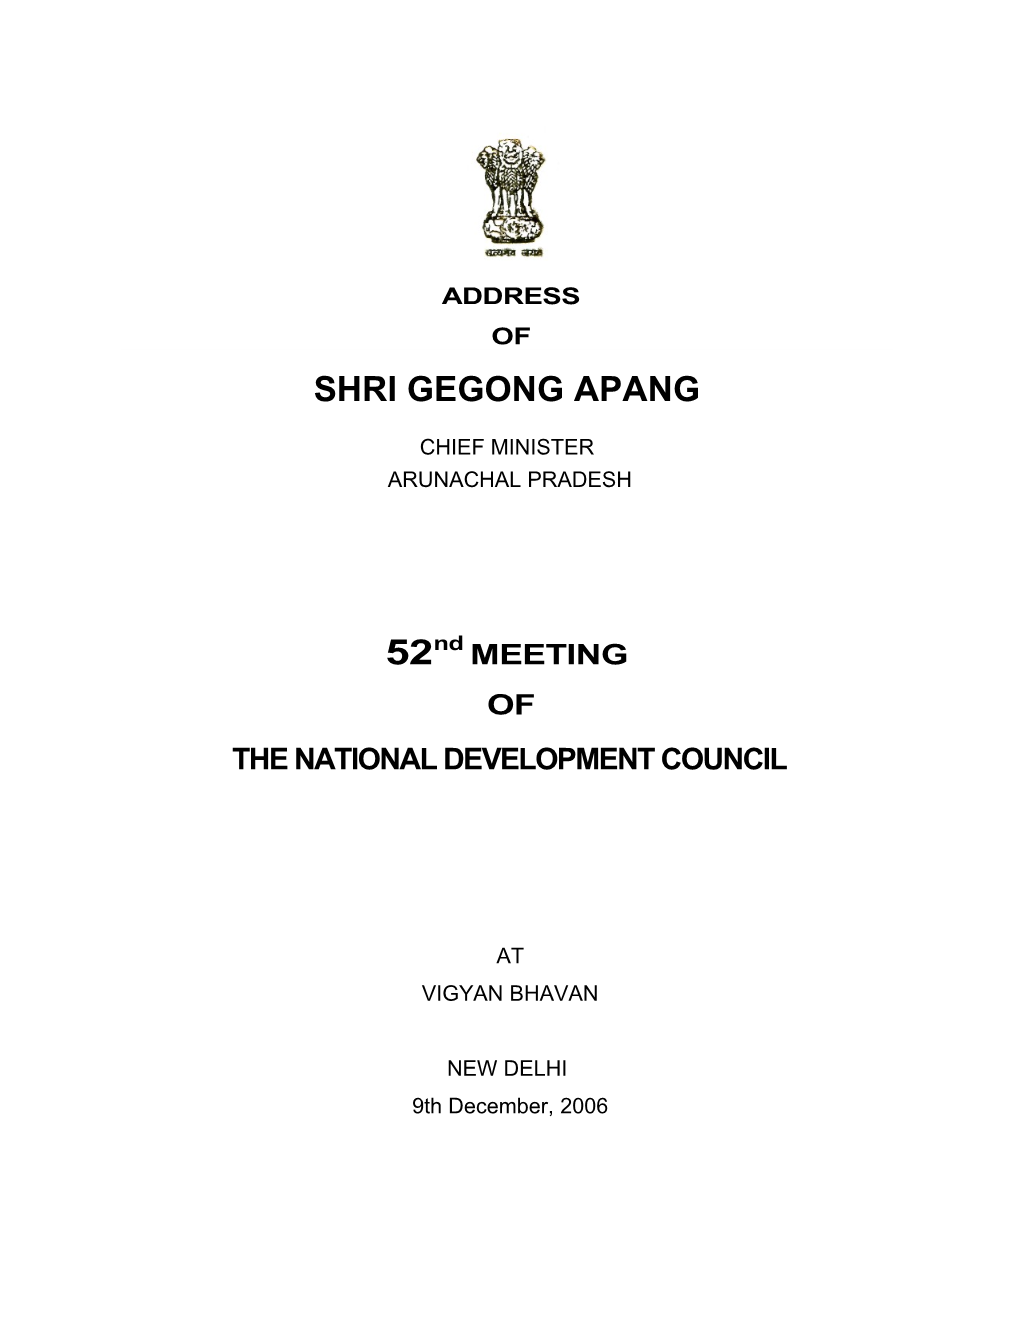 The National Development Council